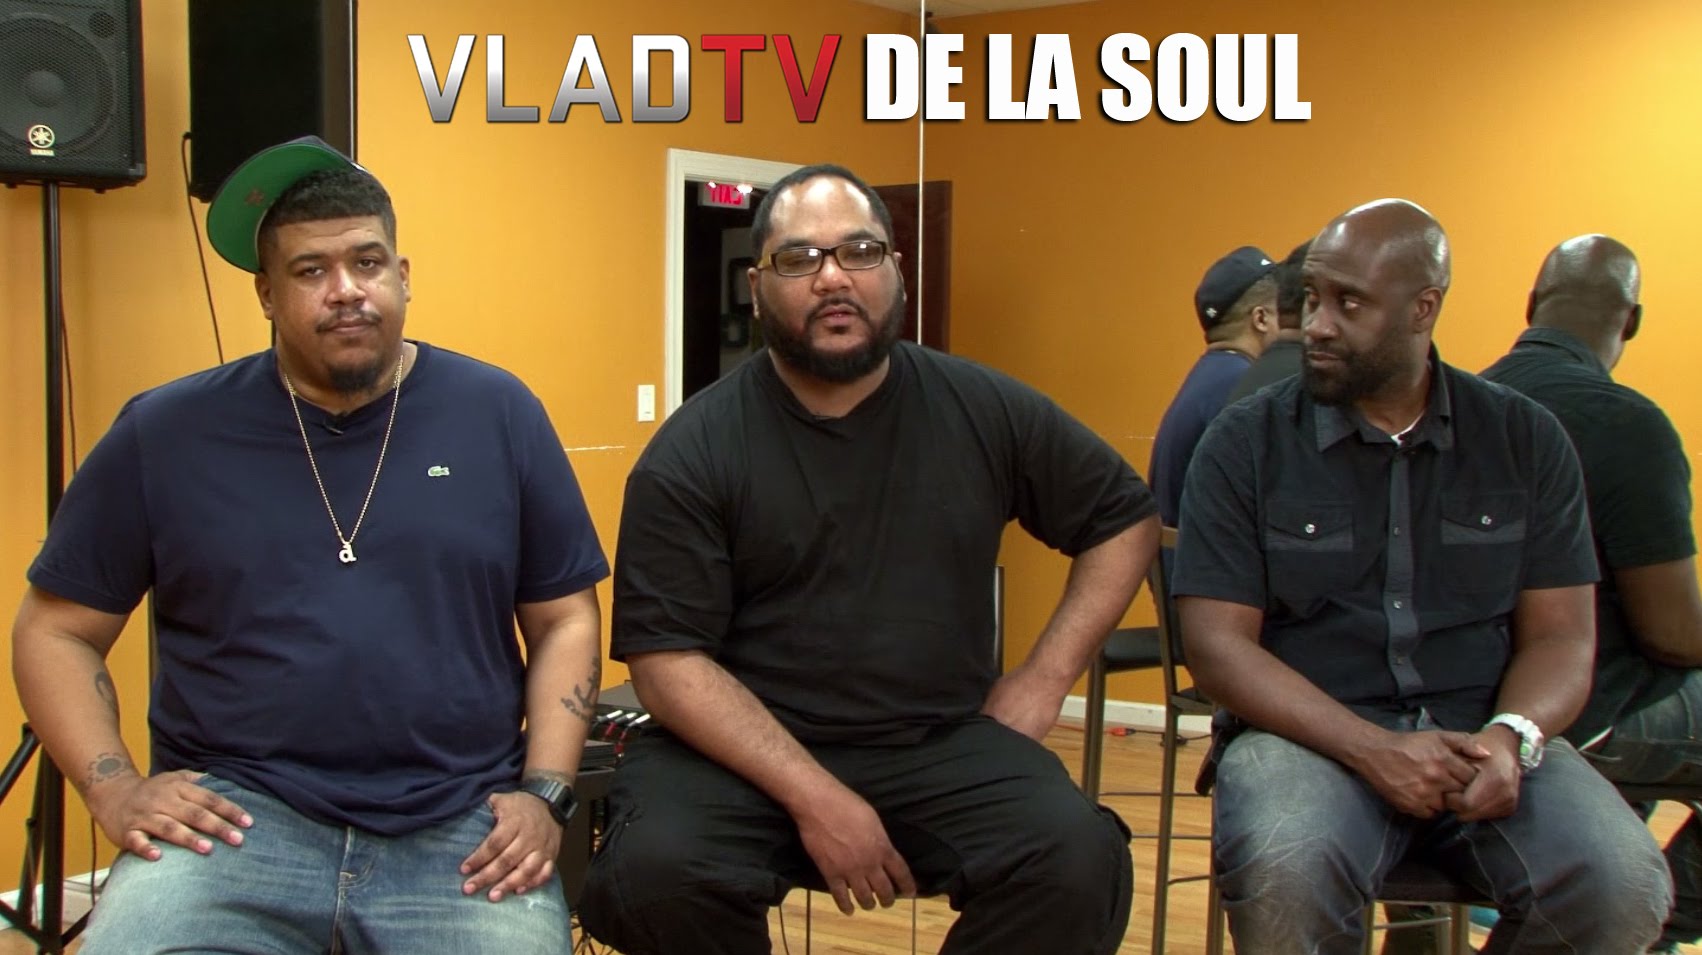 De La Soul: Signing to a Major Label Is Slavery